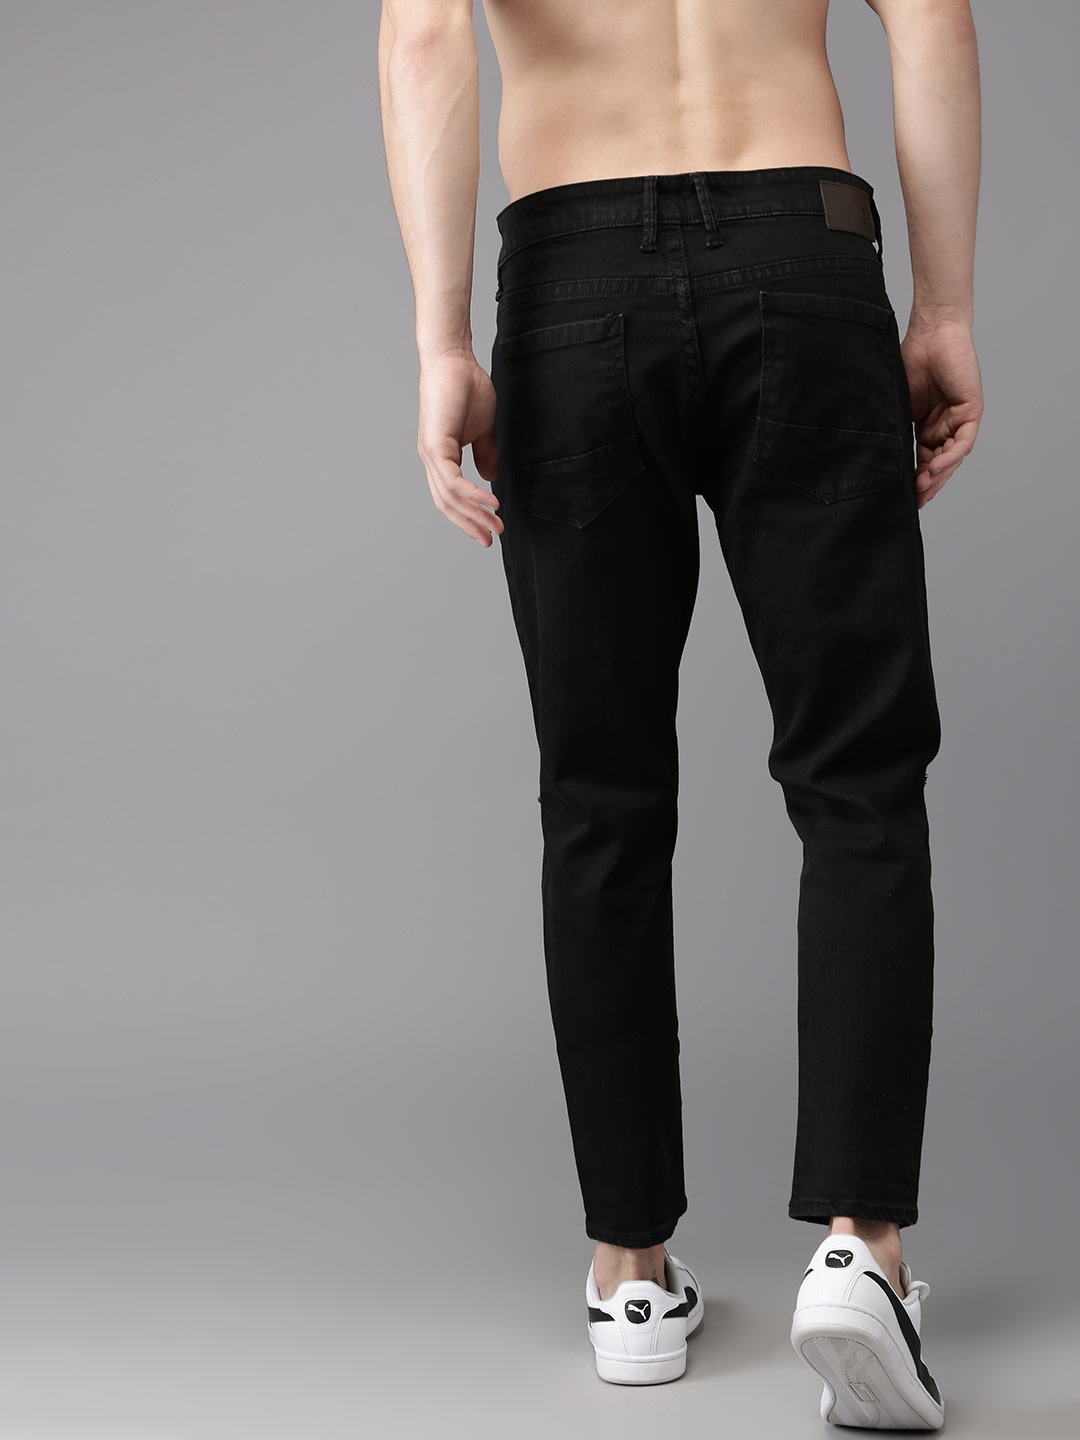 Buy Hootry Men's Slim Fit Black Jeans Online @ ₹799 from ShopClues